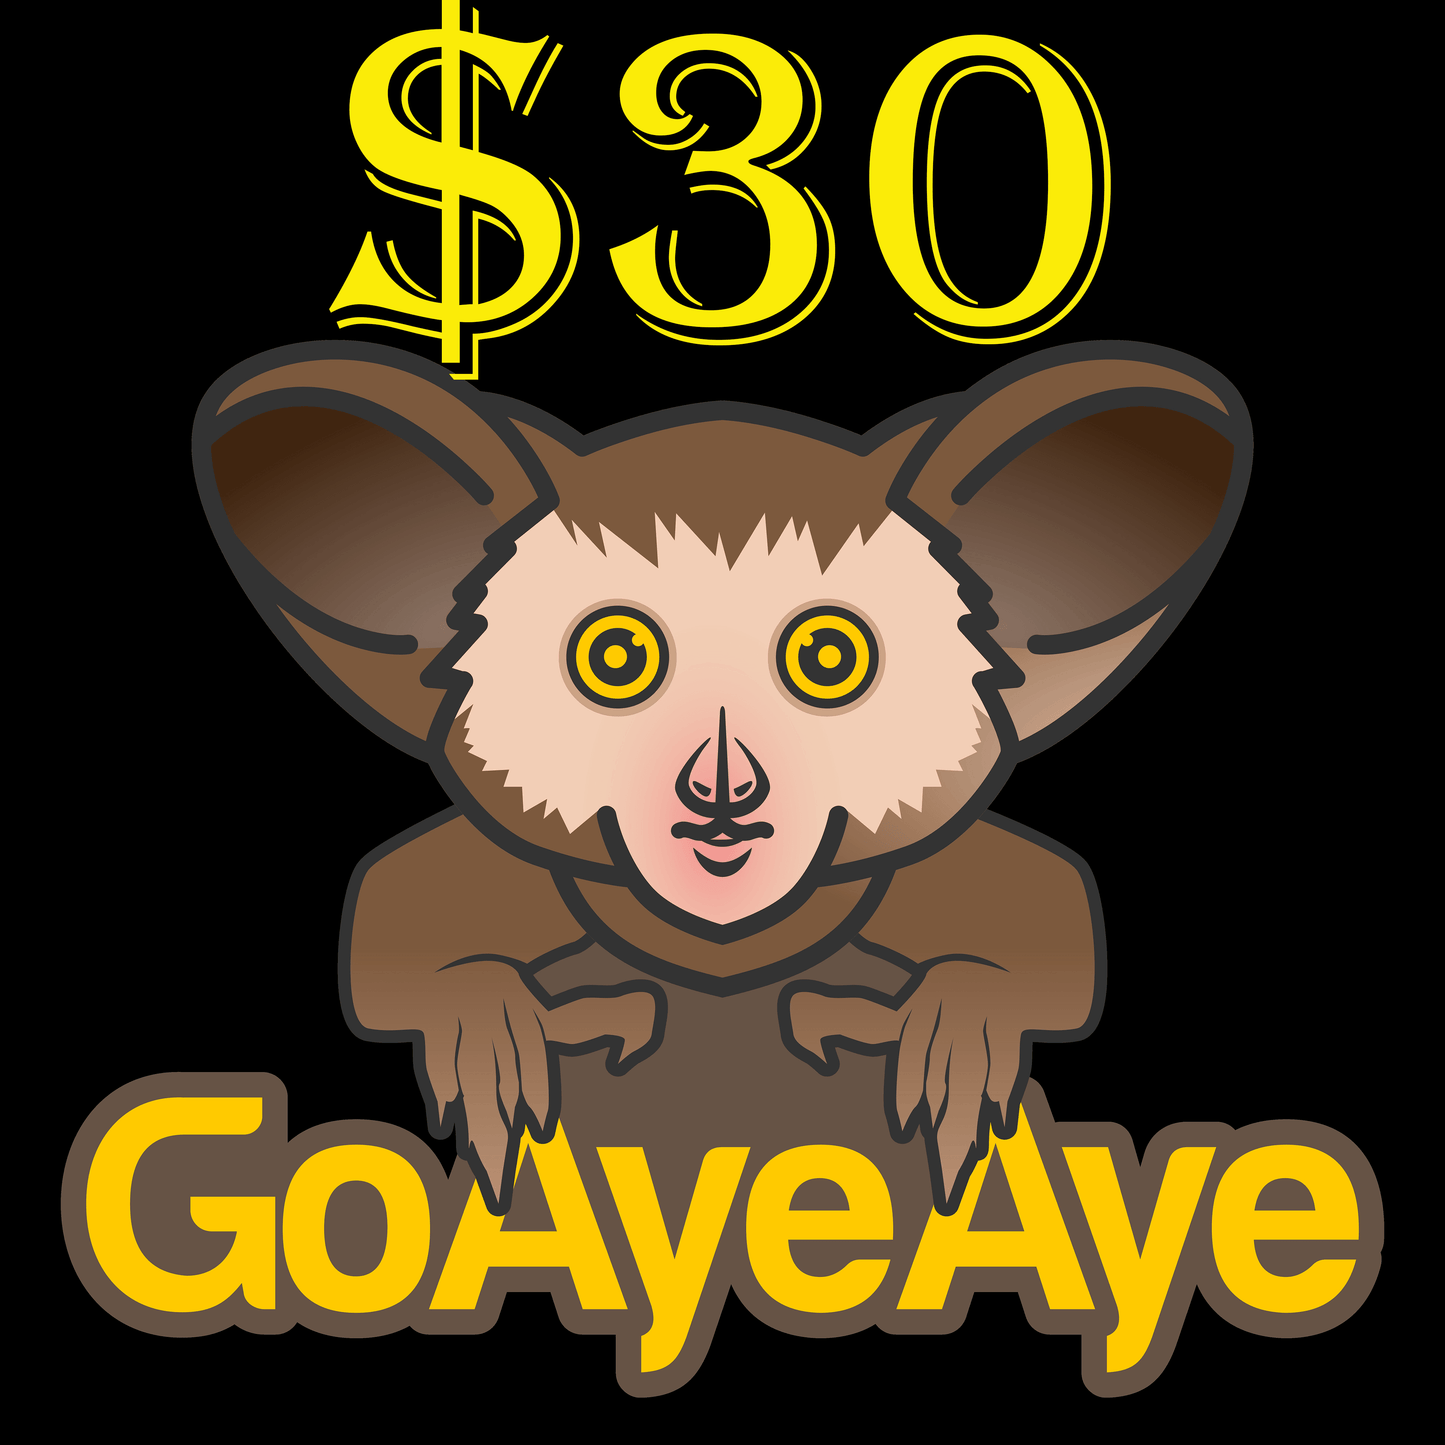 GoAyeAye Store Gift Card - GoAyeAye